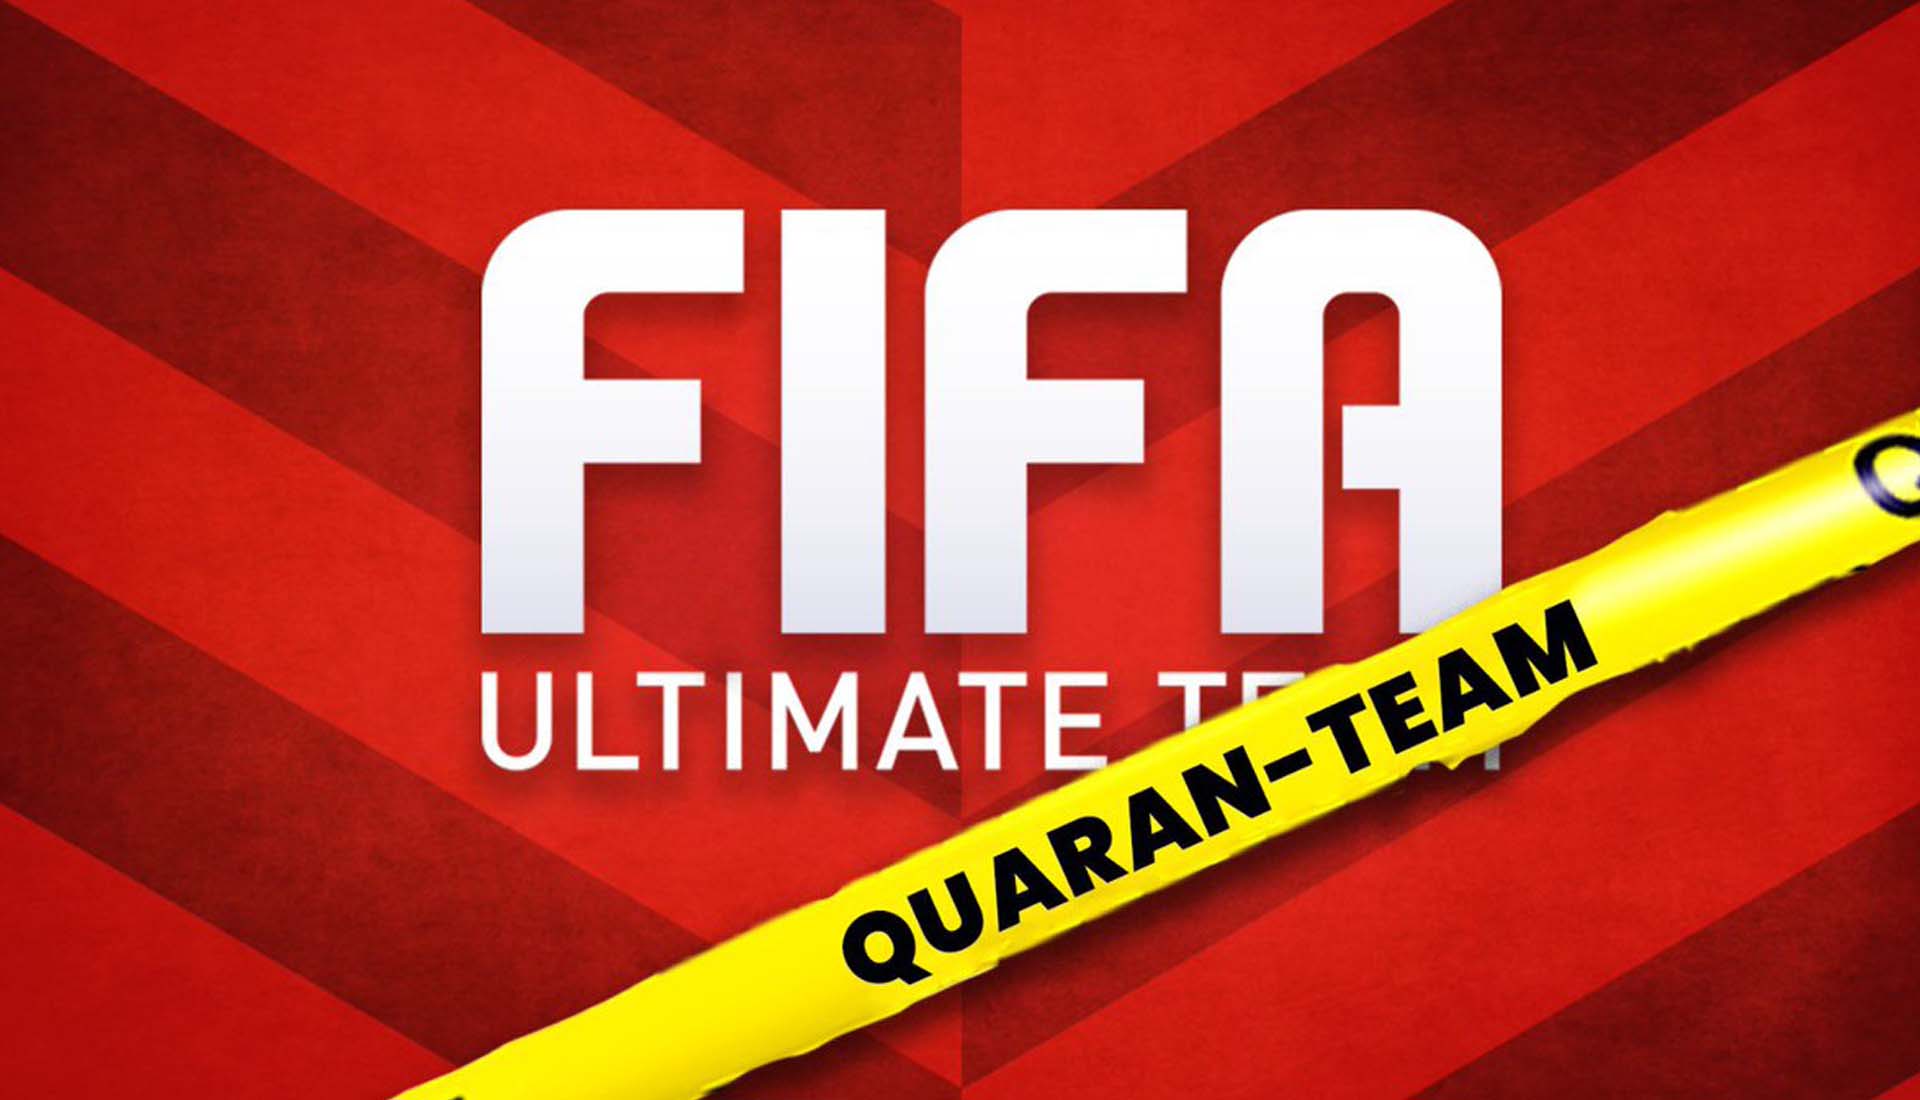 Ultimate Quaran-team